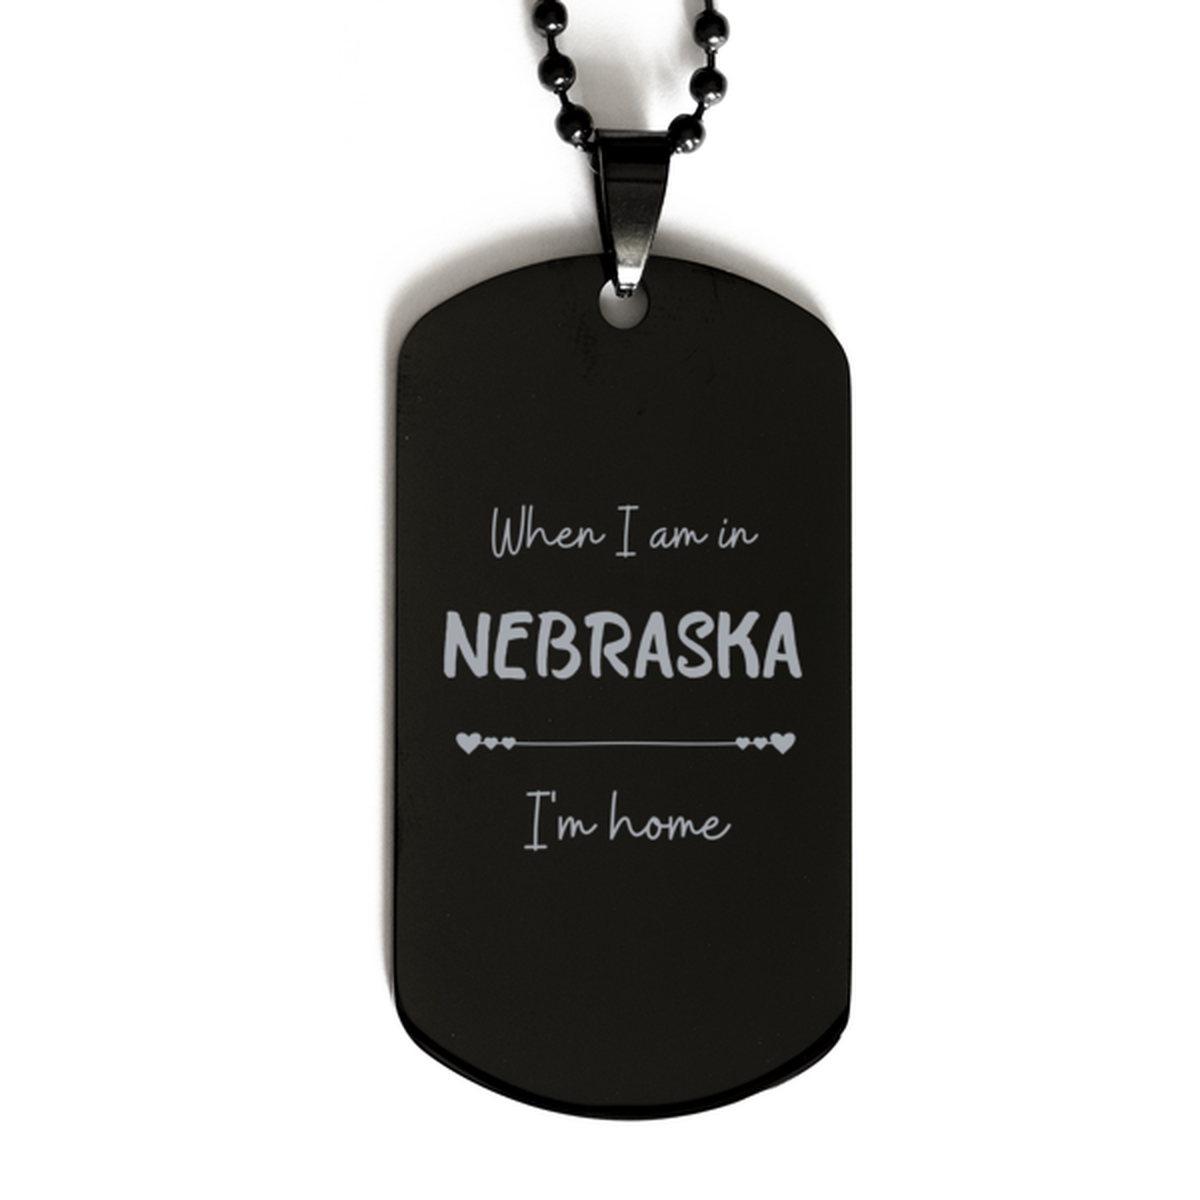 When I am in Nebraska I'm home Black Dog Tag, Cheap Gifts For Nebraska, State Nebraska Birthday Gifts for Friends Coworker